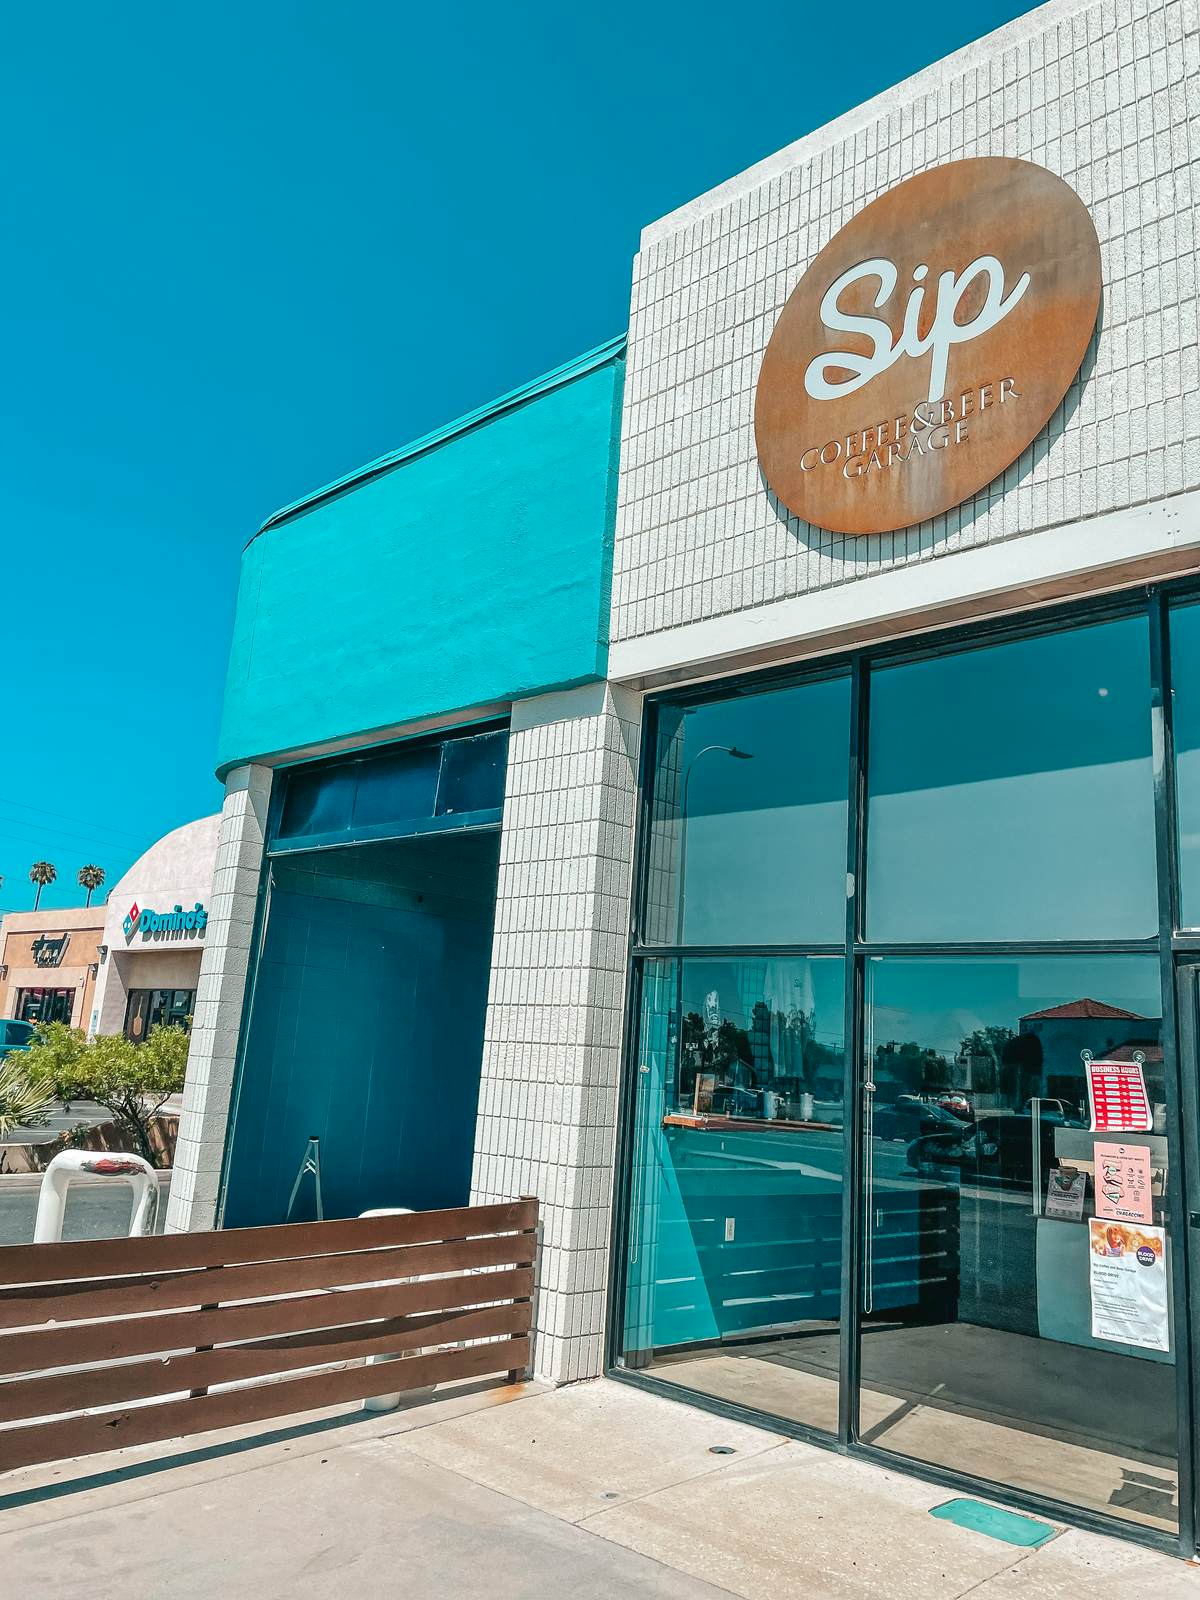 Sip Coffee and Beer in Scottsdale